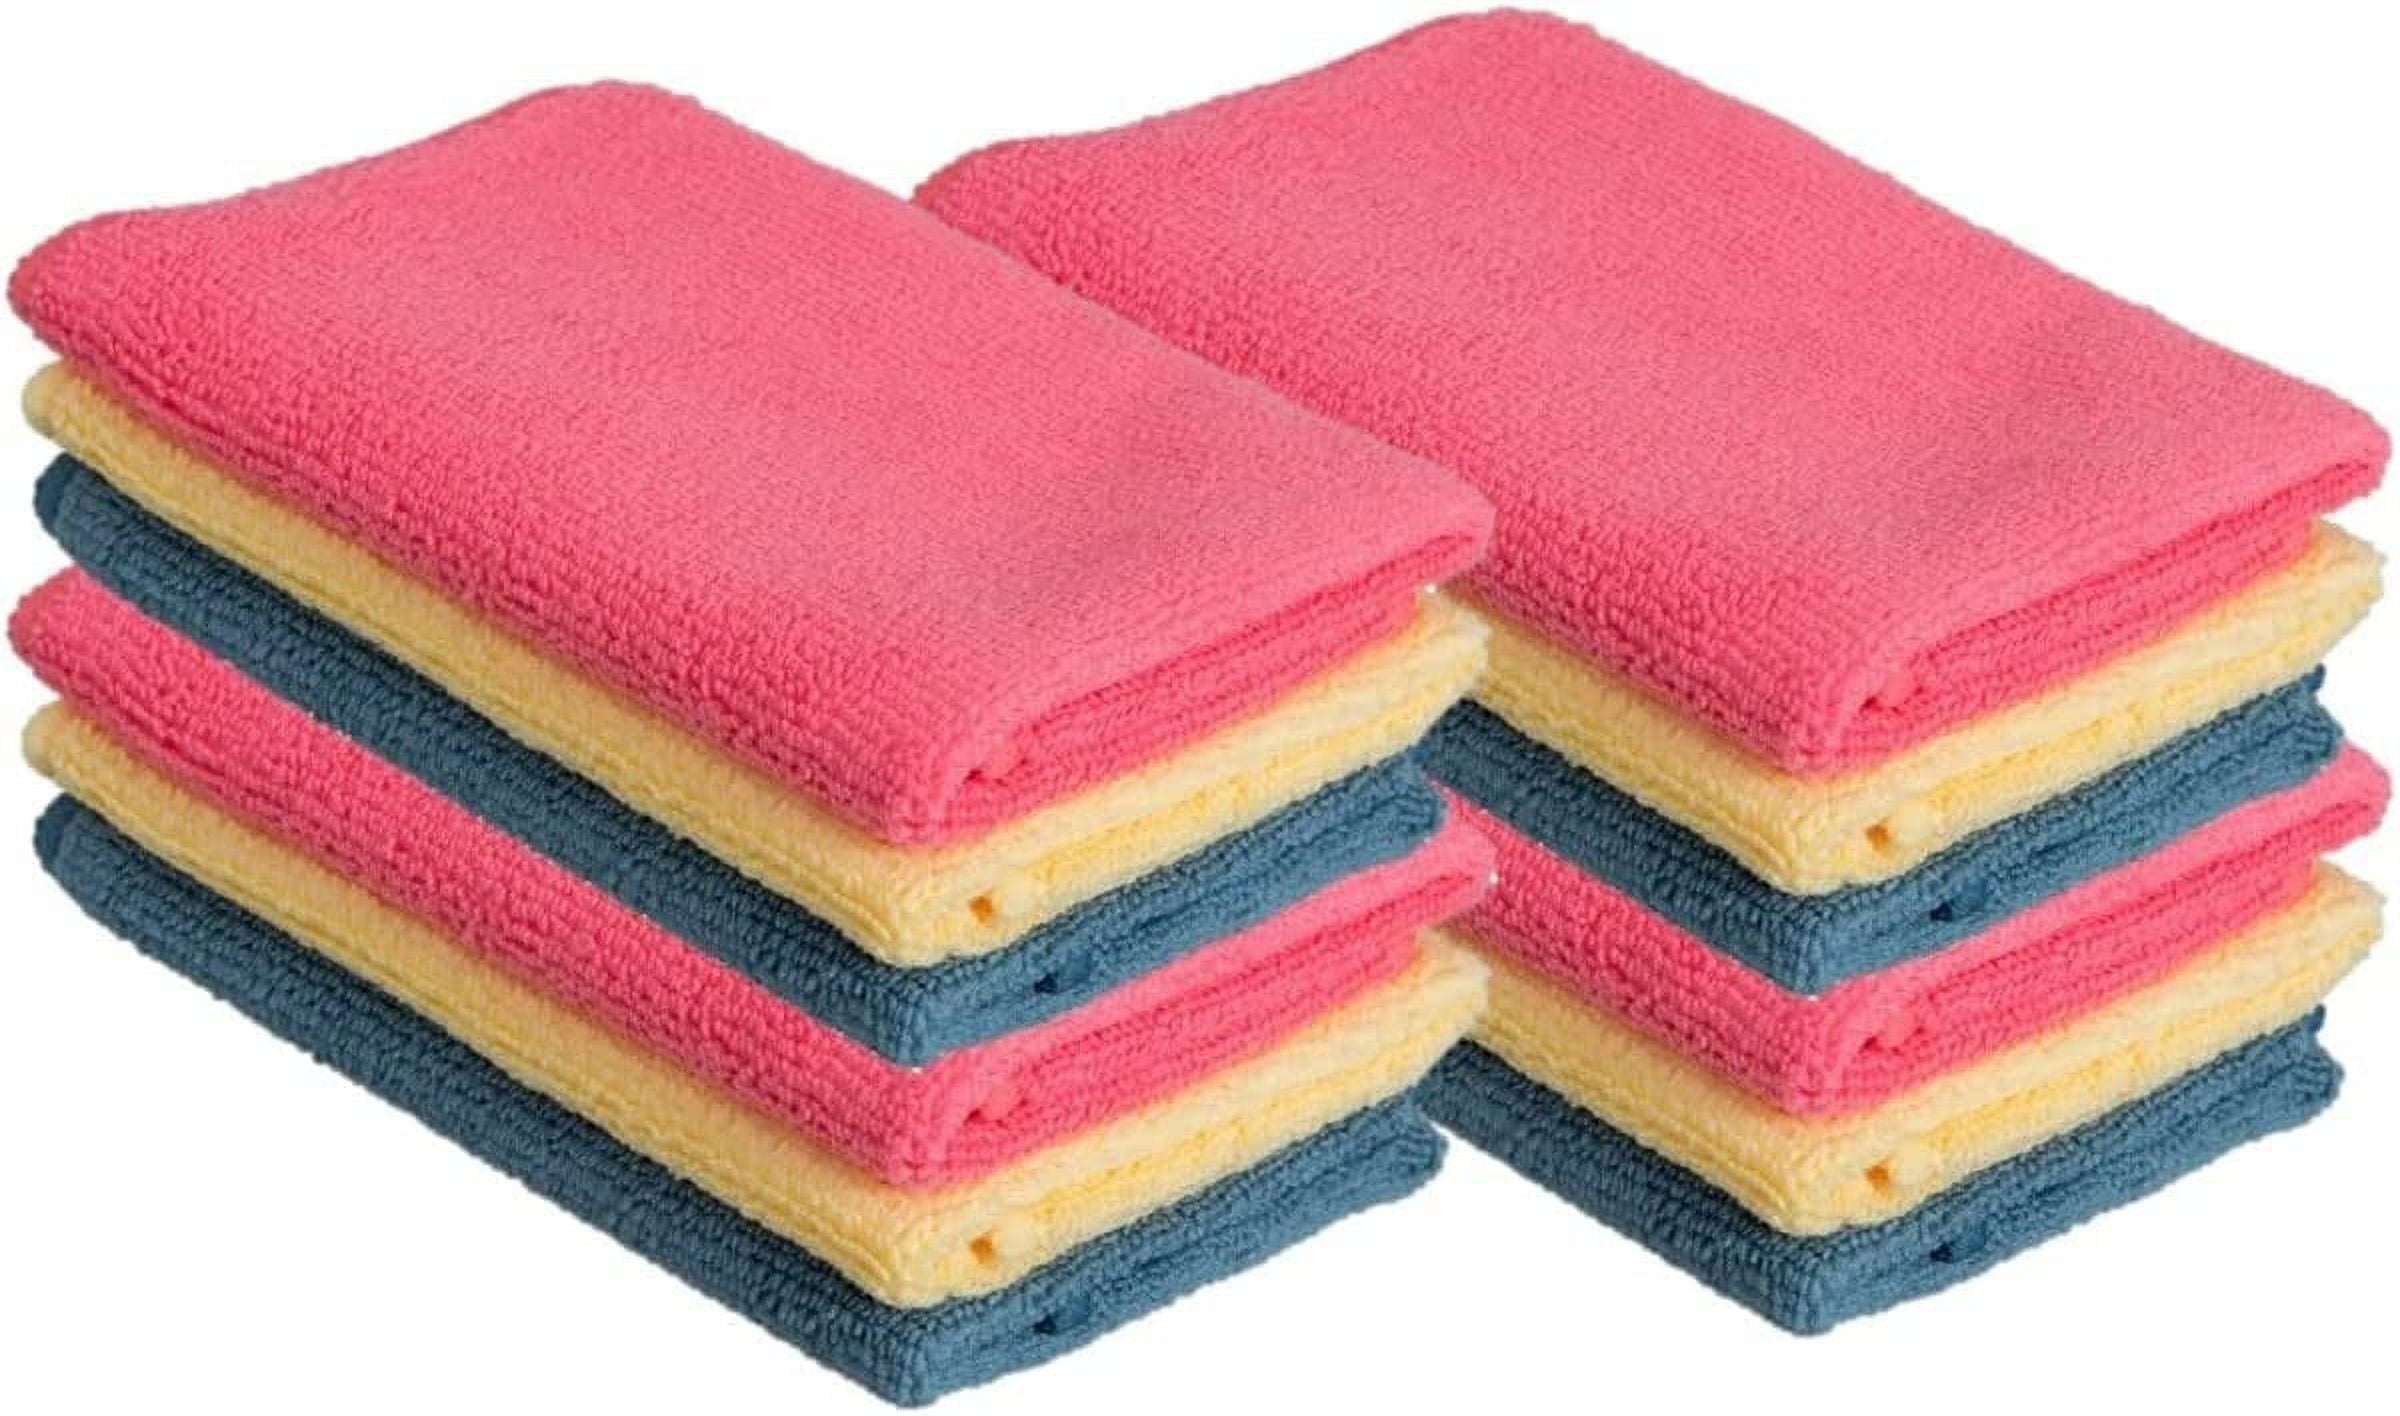 12pcs/set Durable Coral Fleece Cleaning Cloth Reusable Super Absorbent CS